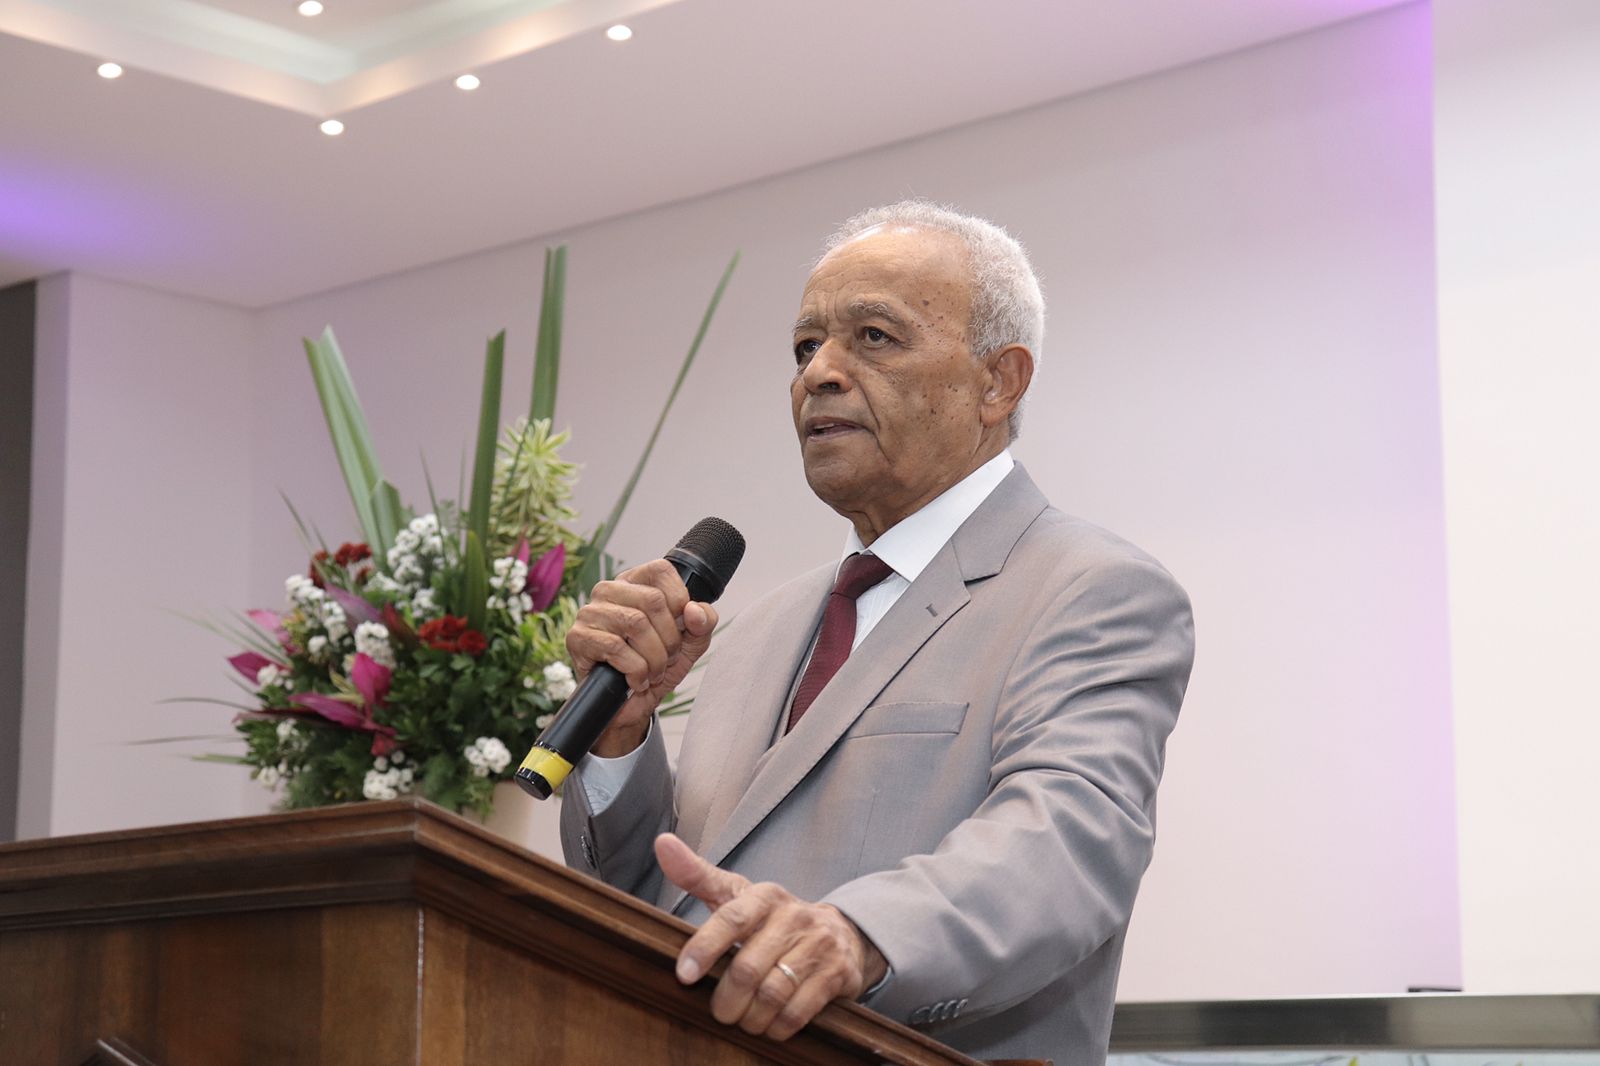 Pastor Roberto Lara